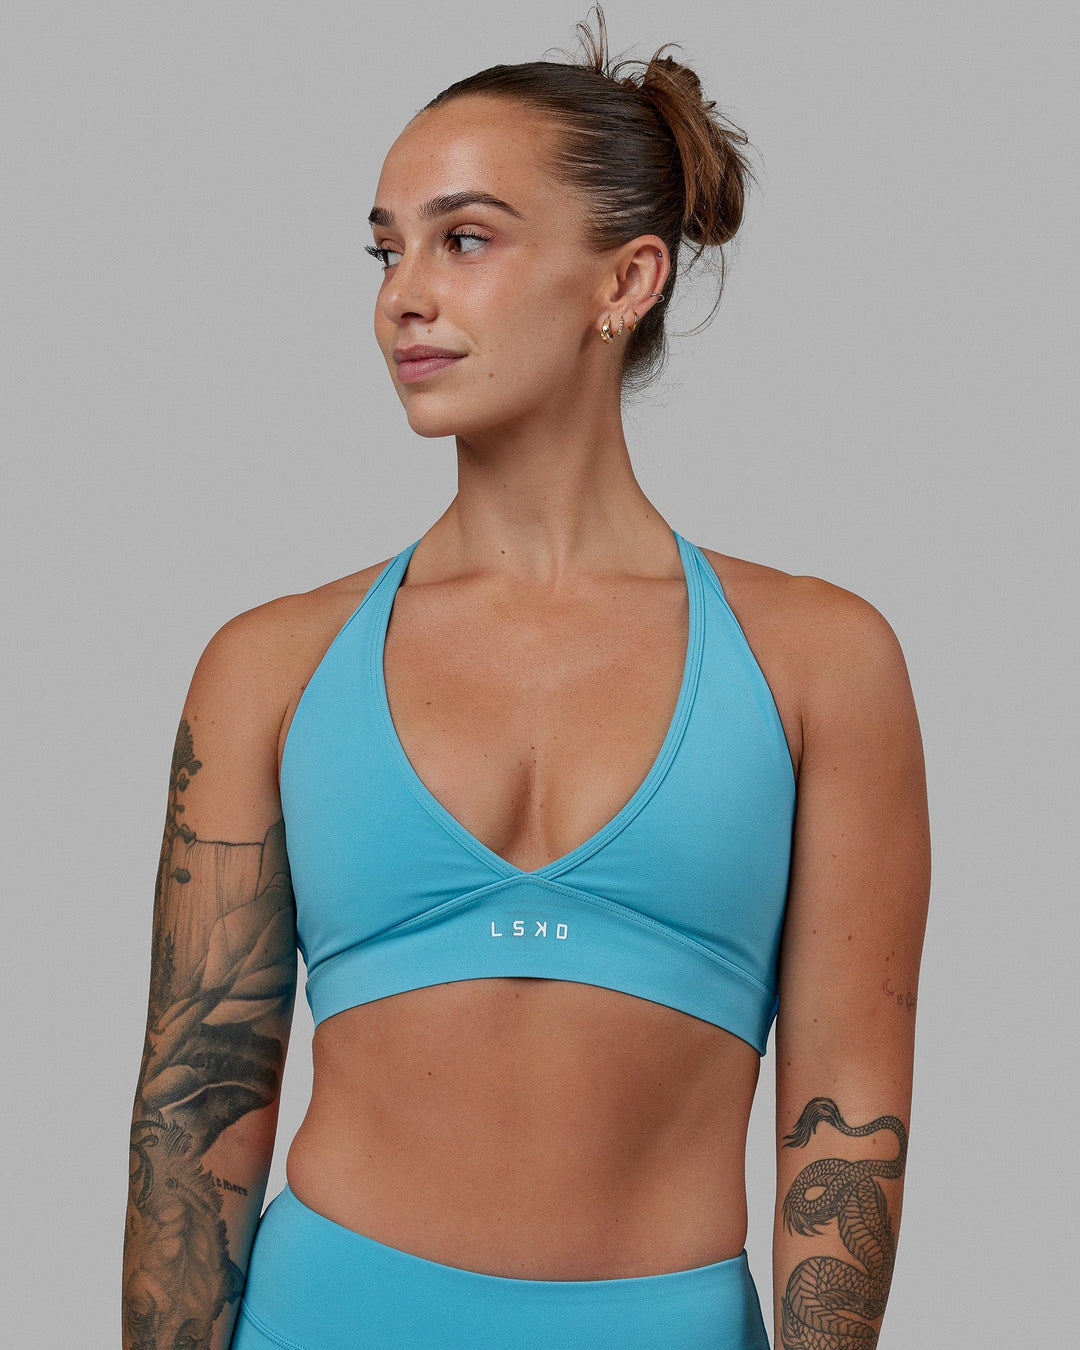 Woman wearing Form Sports Bra - Pacific Blue